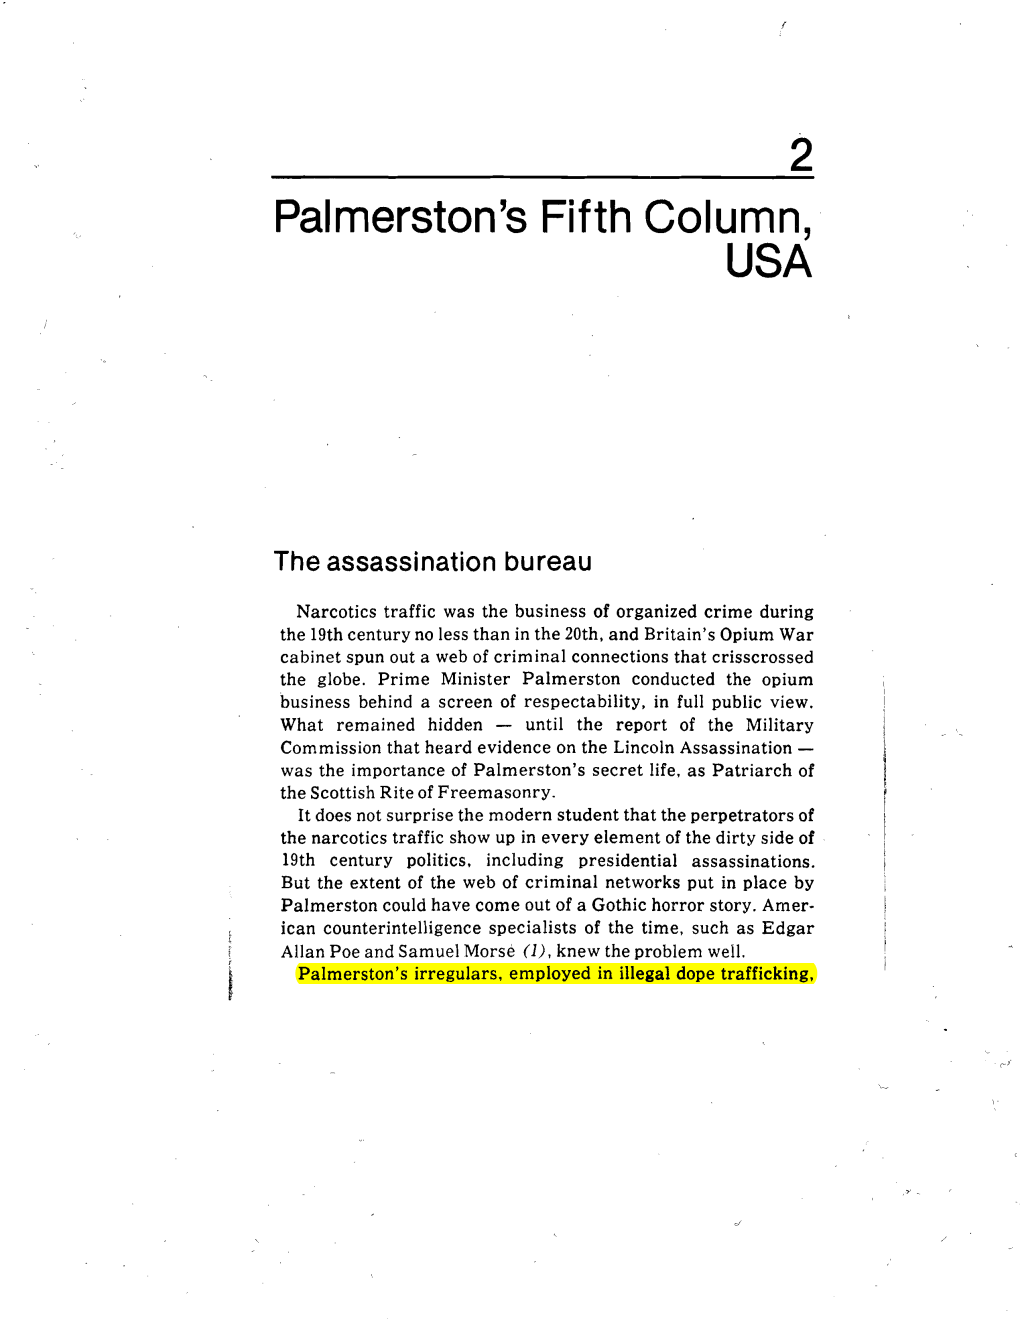 Palmerston's Fifth Column, USA